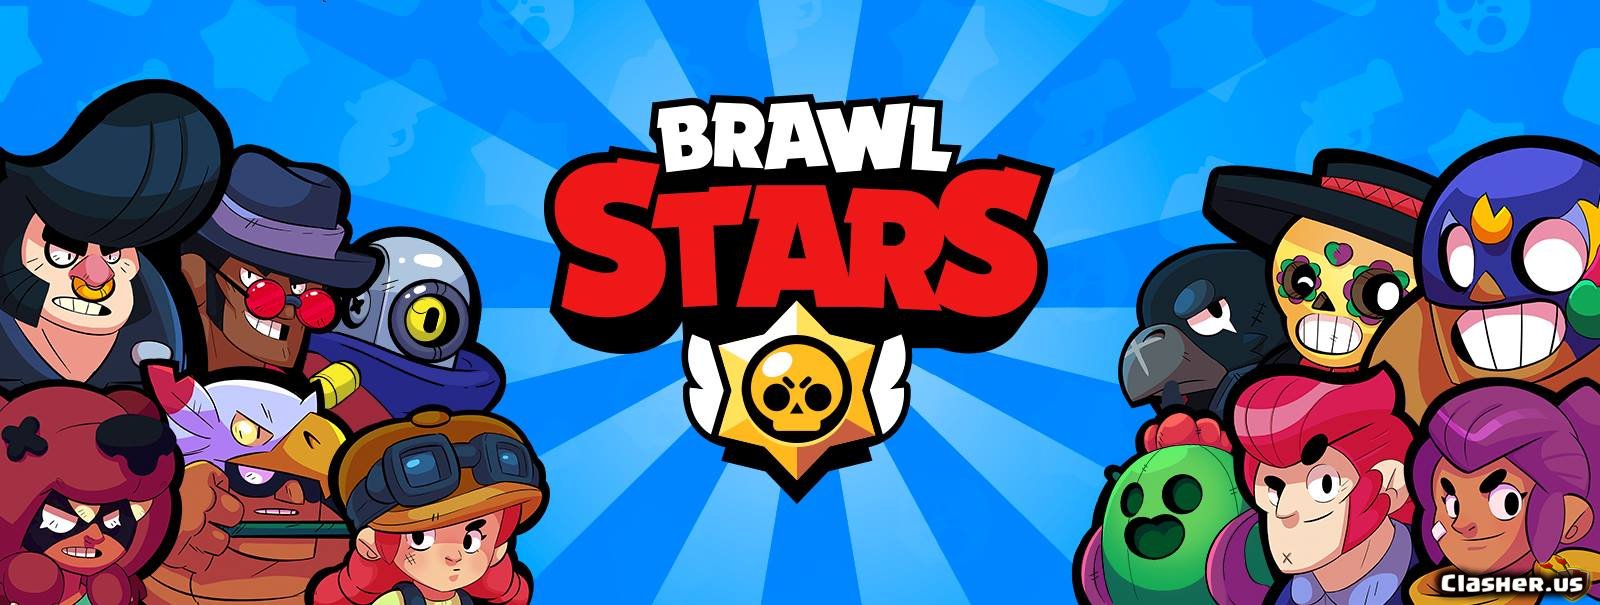 12 Brawlers Brawl Stars Screenshot Background Brawl Stars Wallpapers Clasher Us - us release date for brawl stars